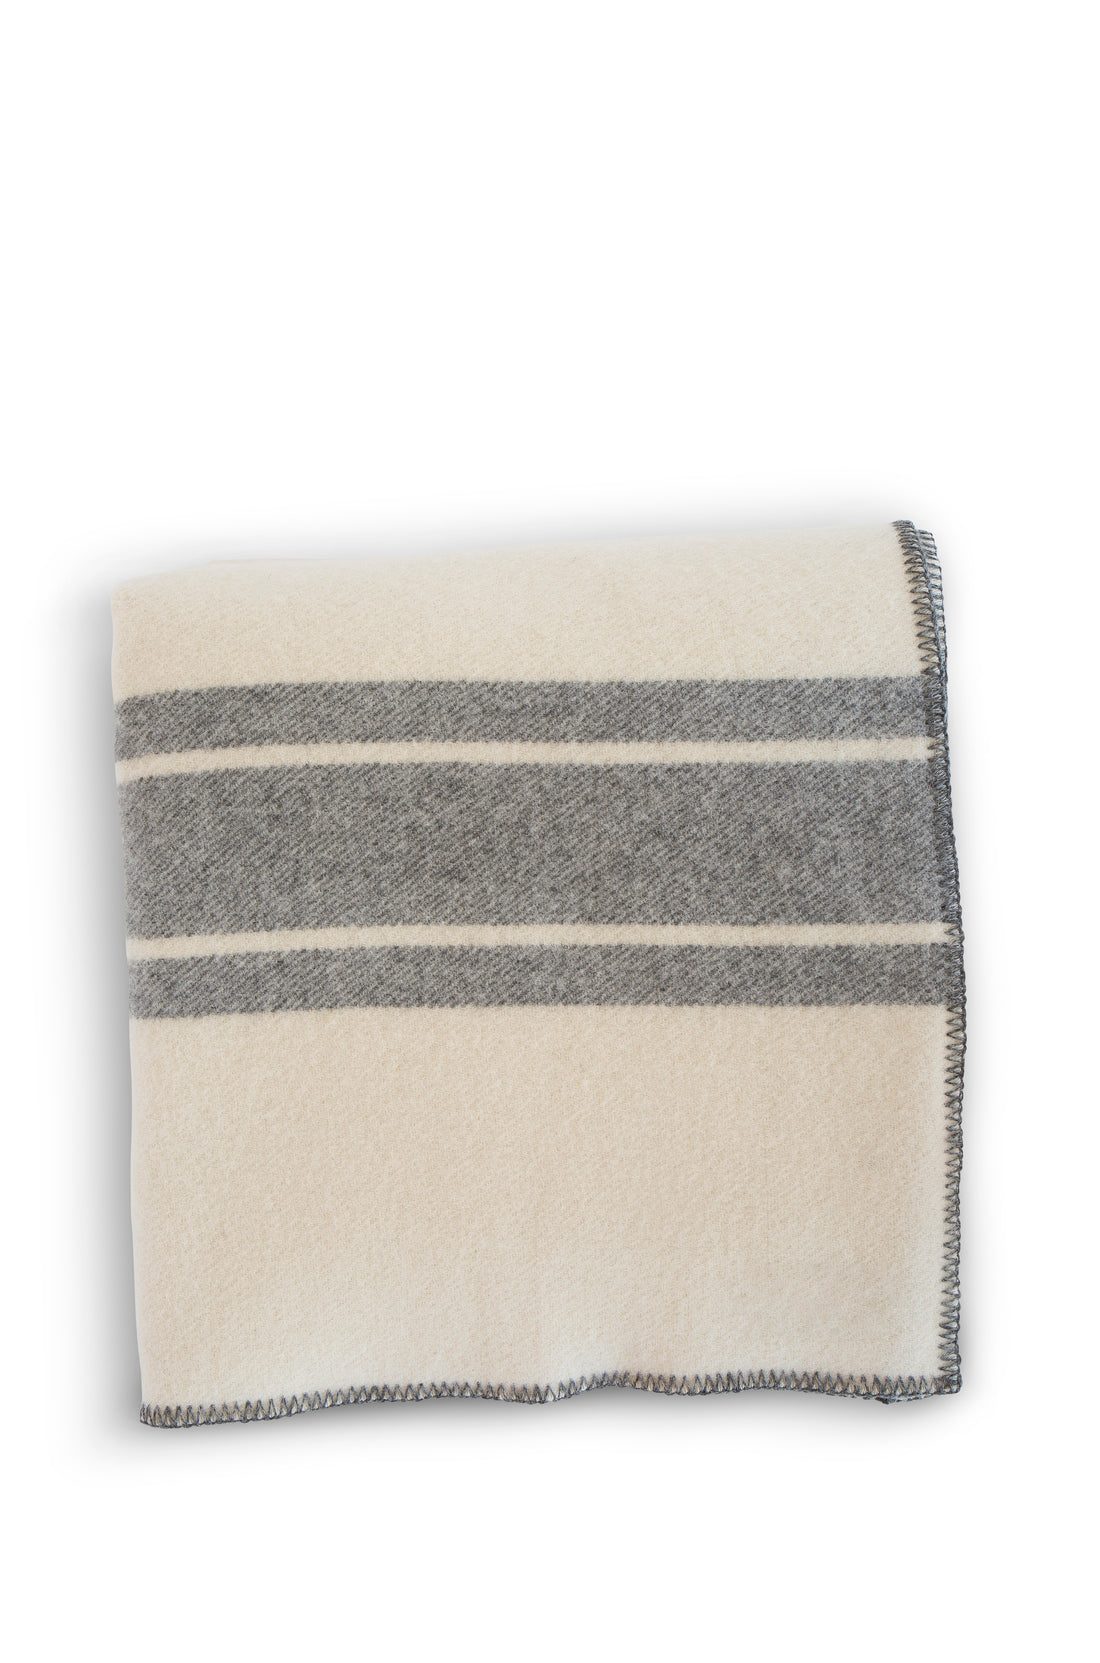 A-Frame Merino Wool Blankets